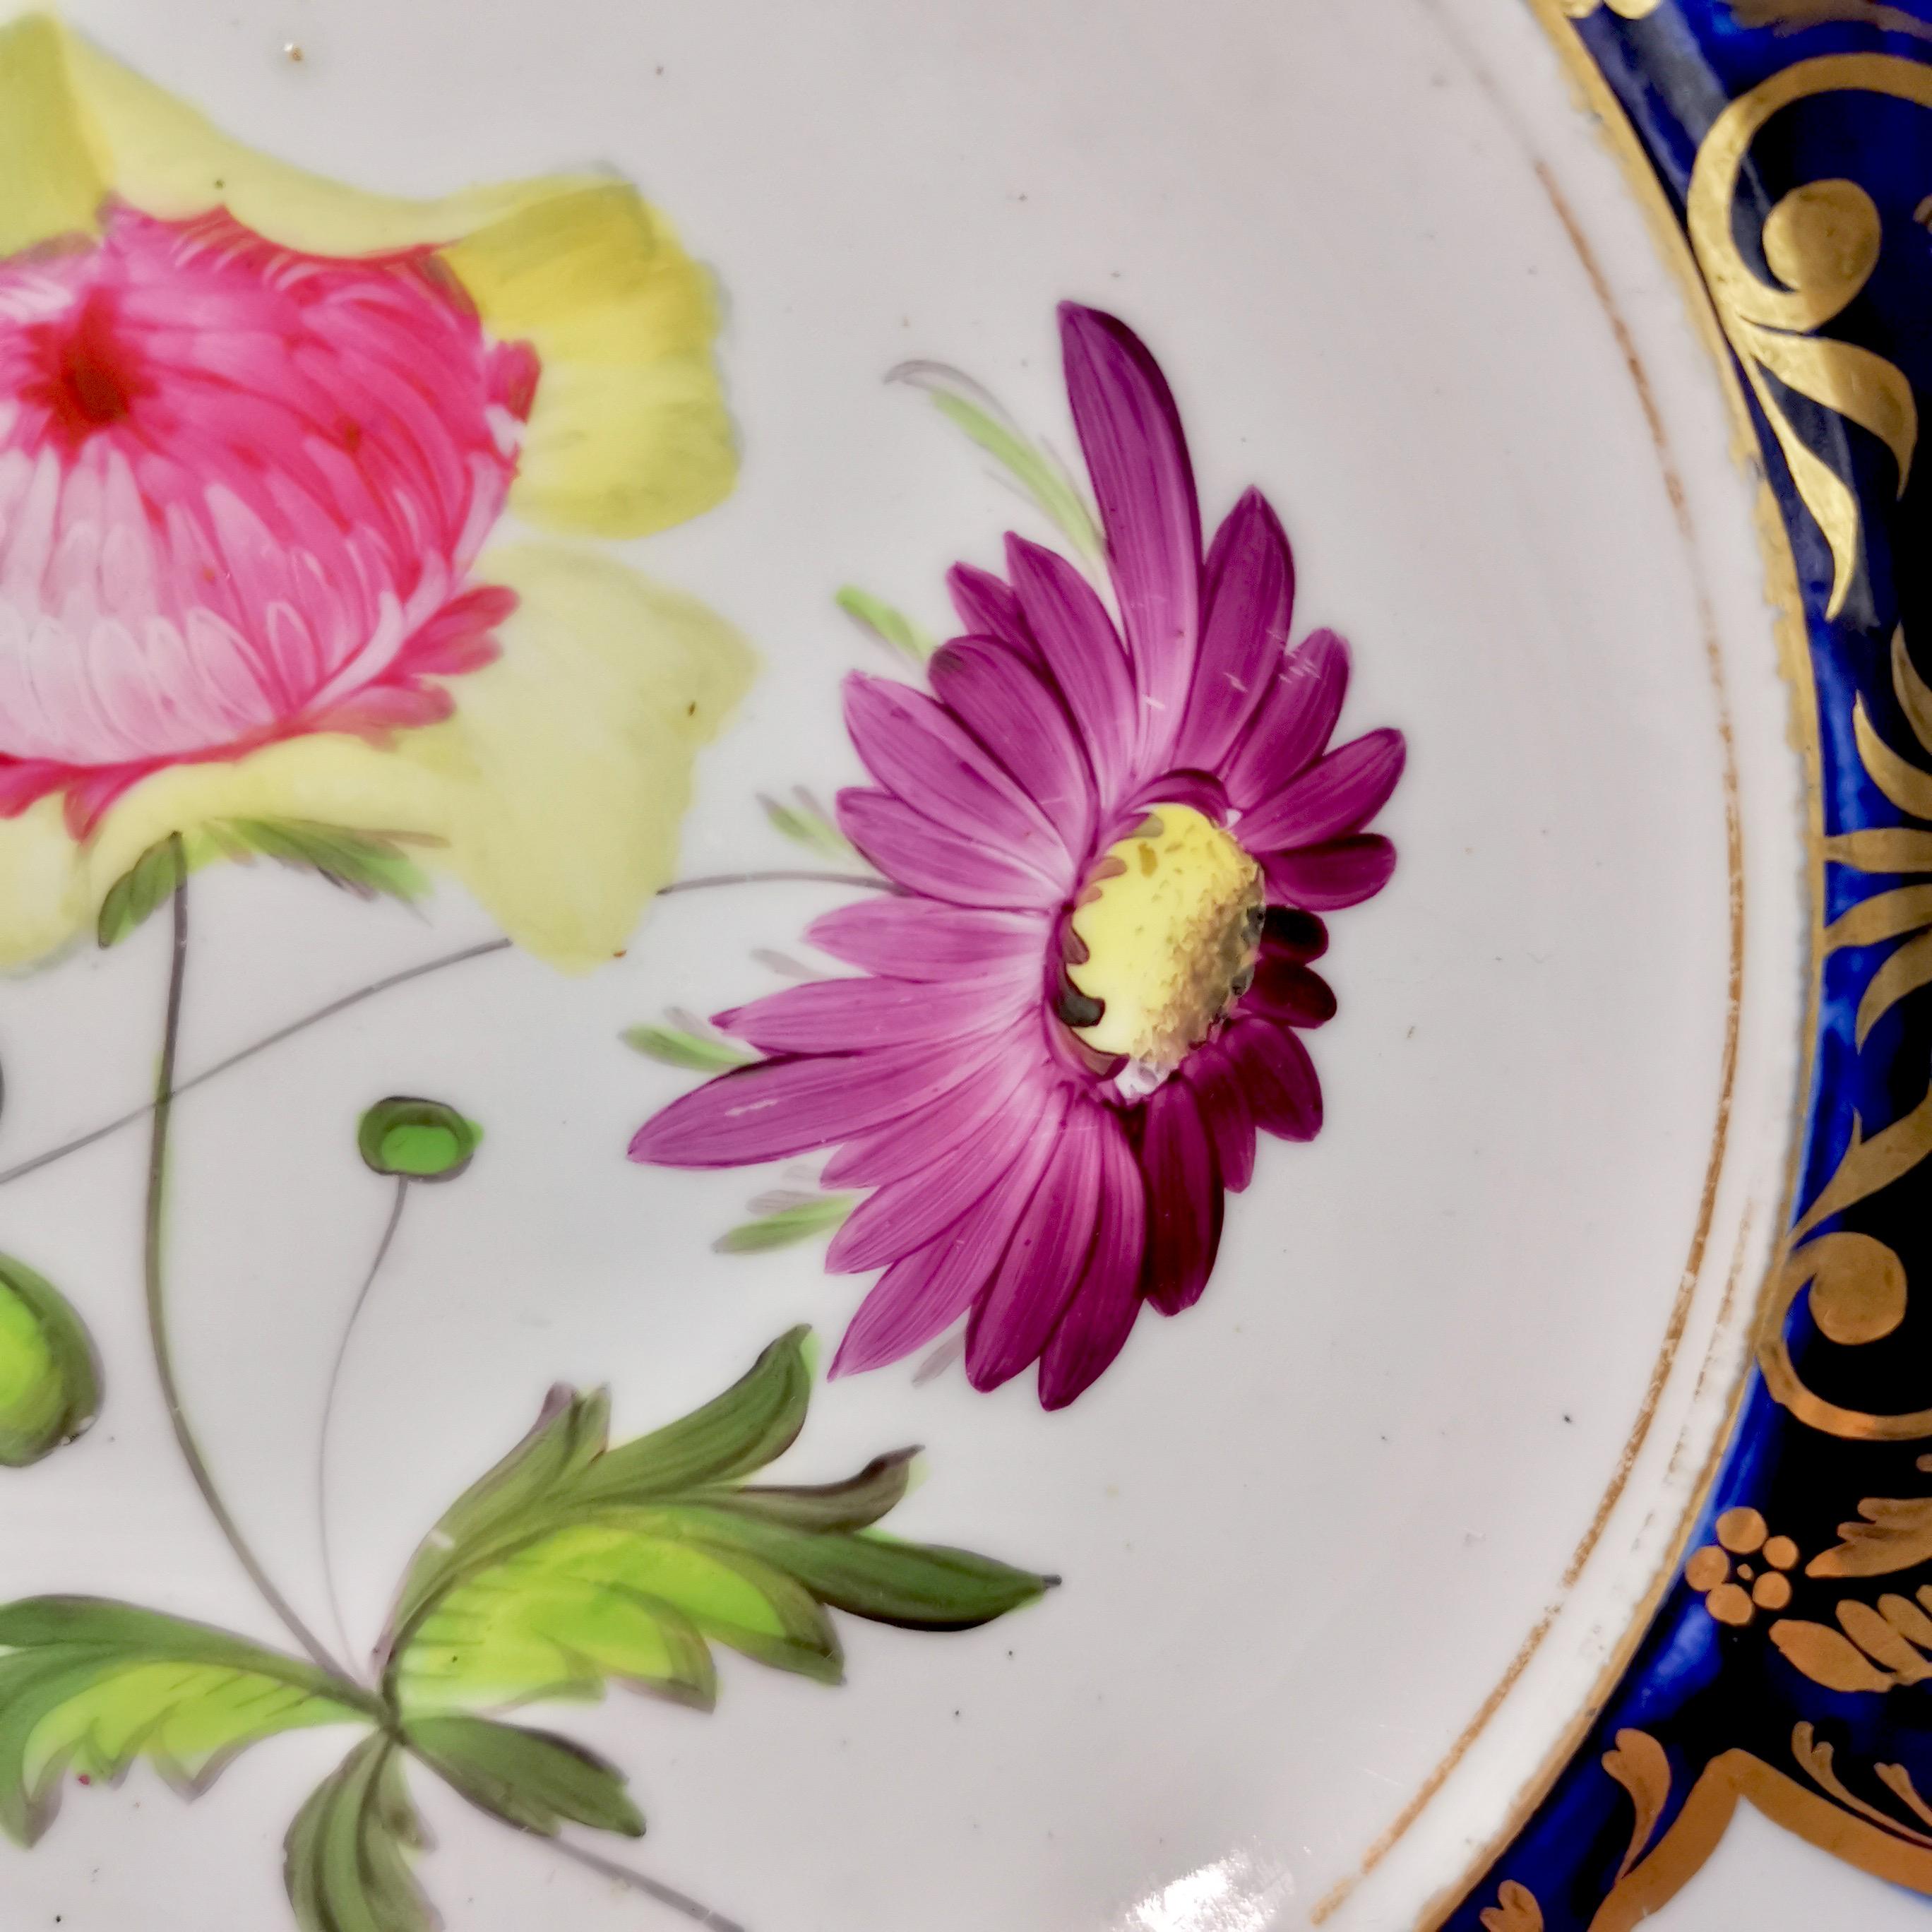 Early 19th Century Machin Porcelain Plate, Cobalt Blue, Gilt and Flowers, Regency, circa 1820